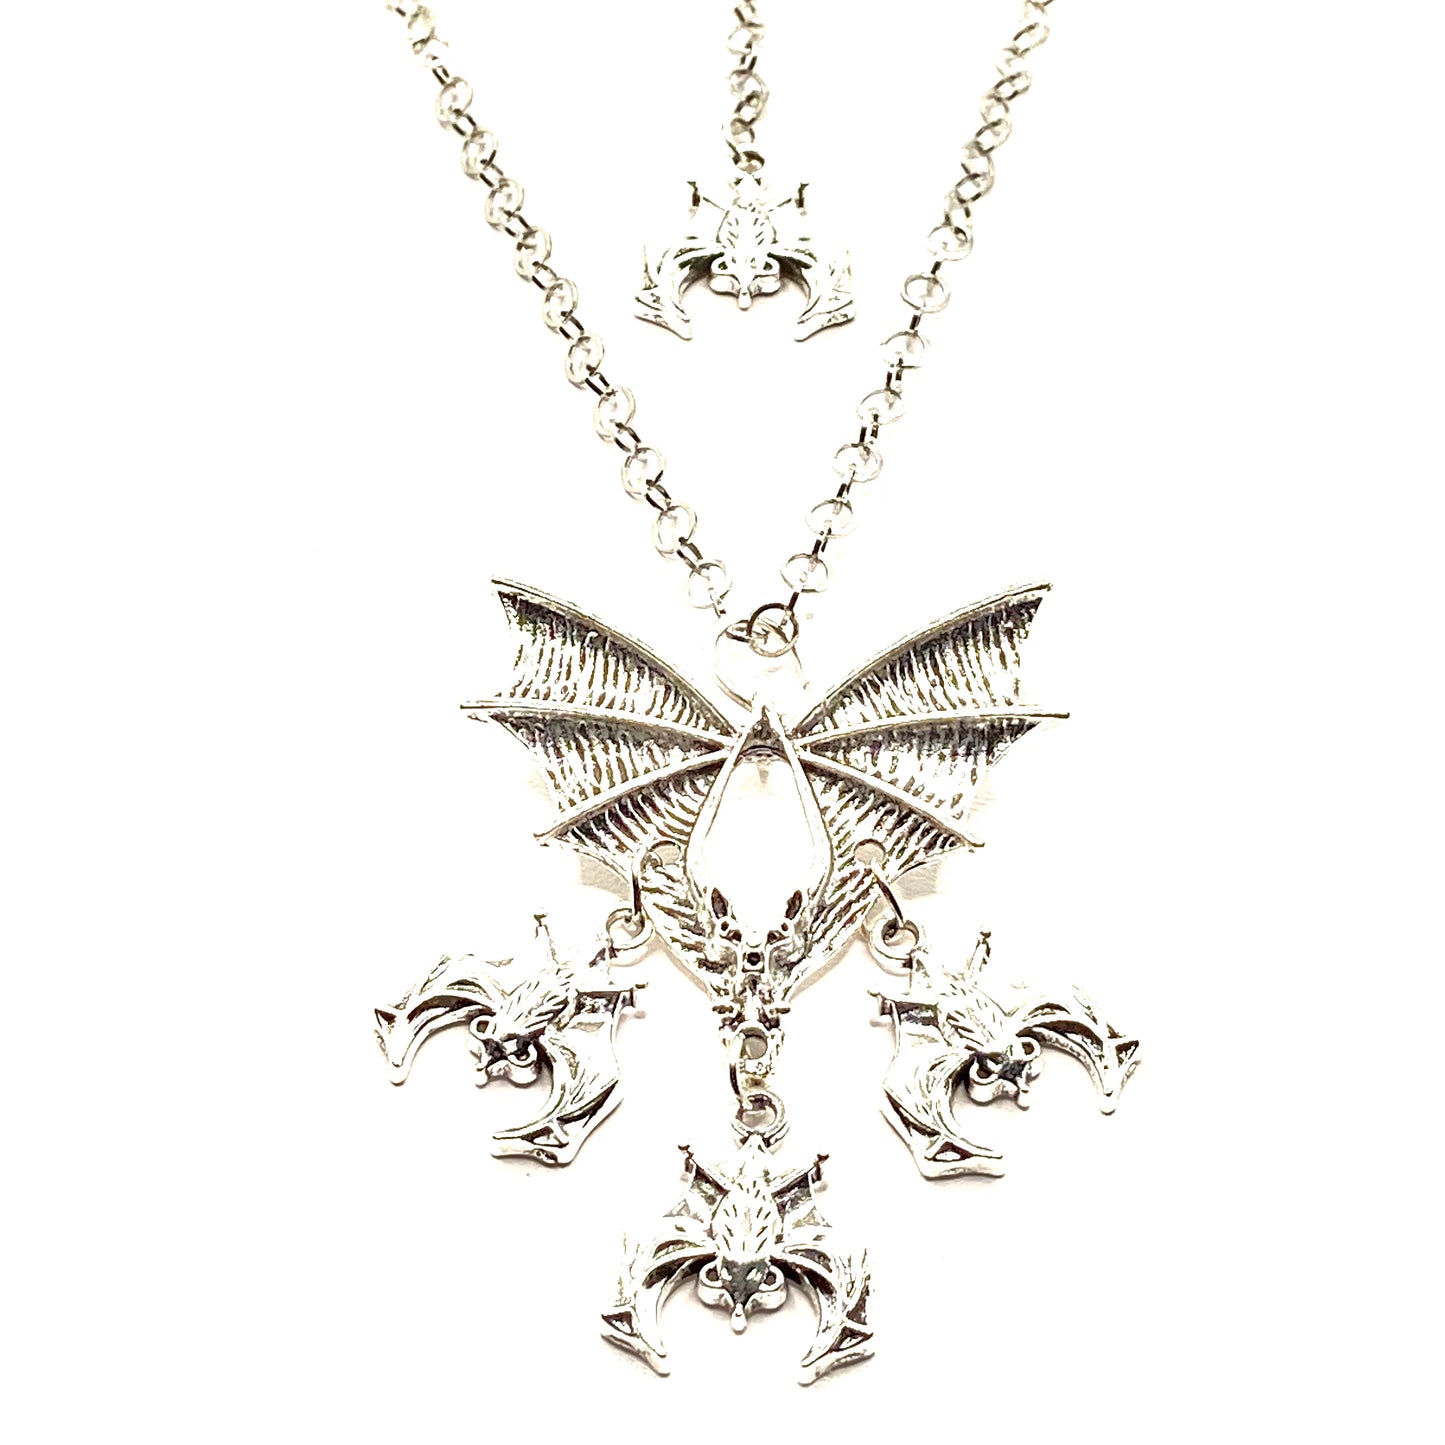 Vampire Family Necklace | 5 Bats Necklace